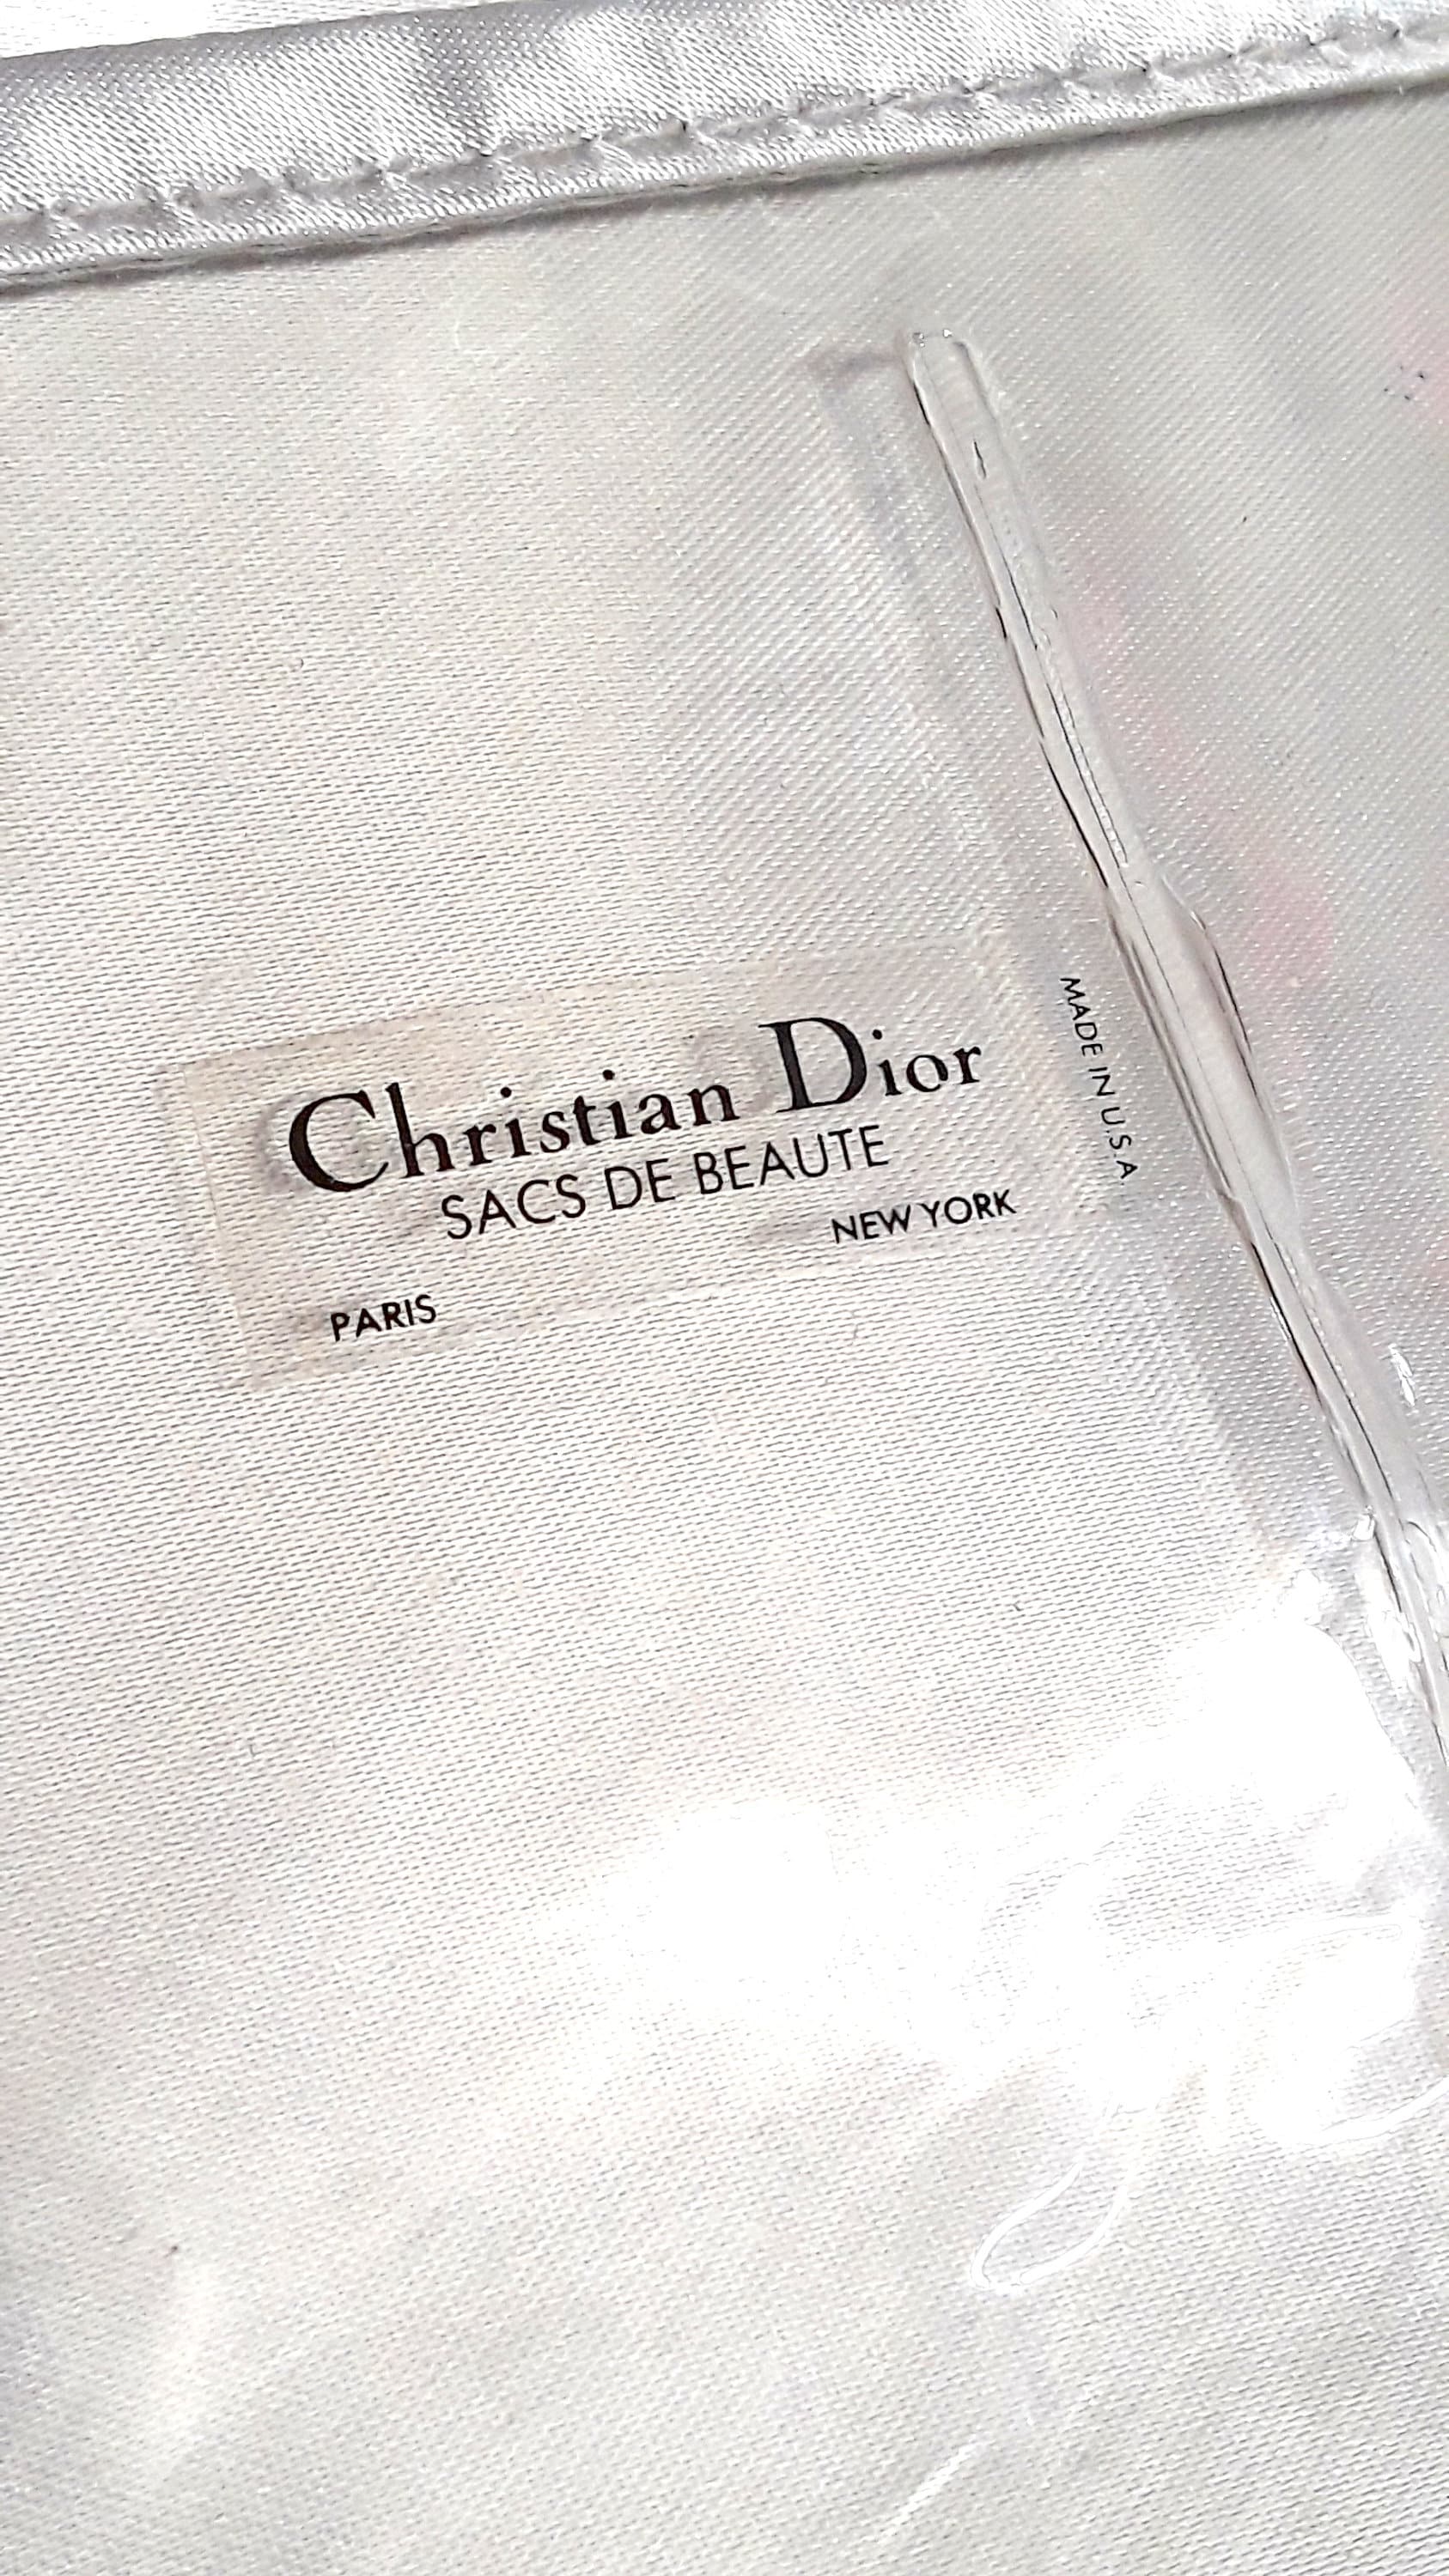 RARE VINTAGE Christian Dior Jewelry Roll Organizer Hanging Holder